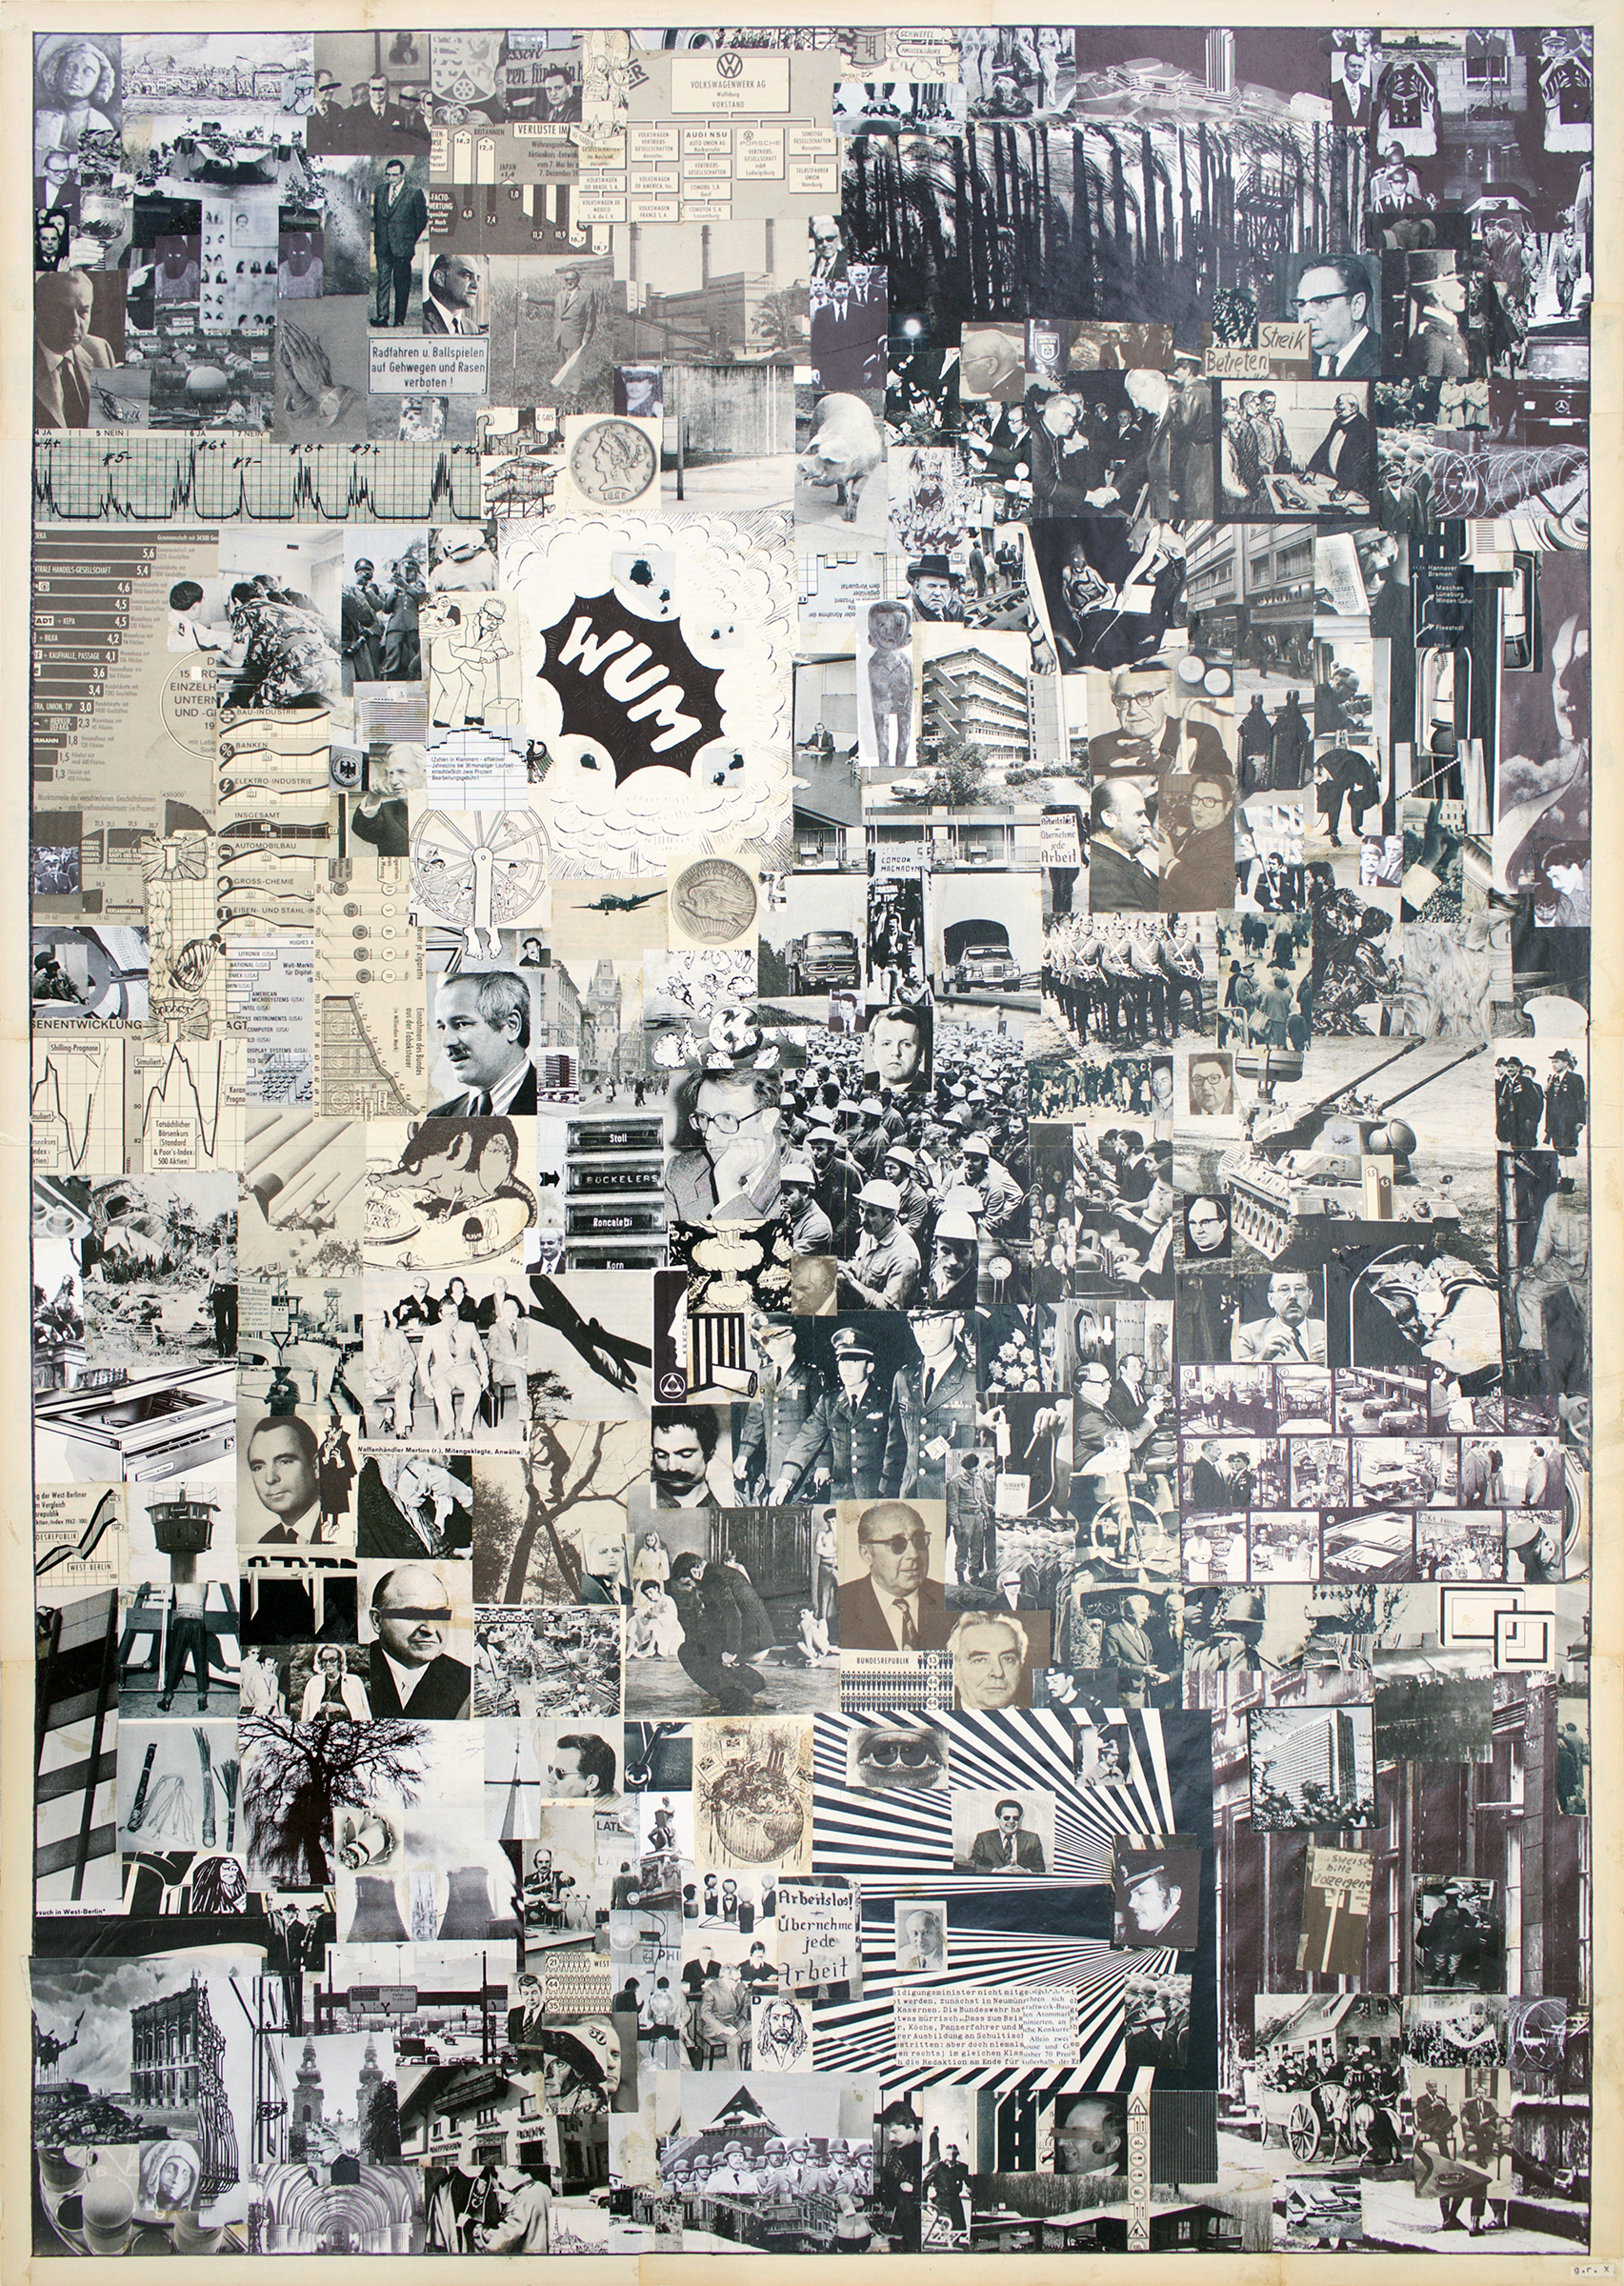  GWENAËL RATTKE  Economic Miracle , 2010 collage on bard, 39.5” x 27.5” 